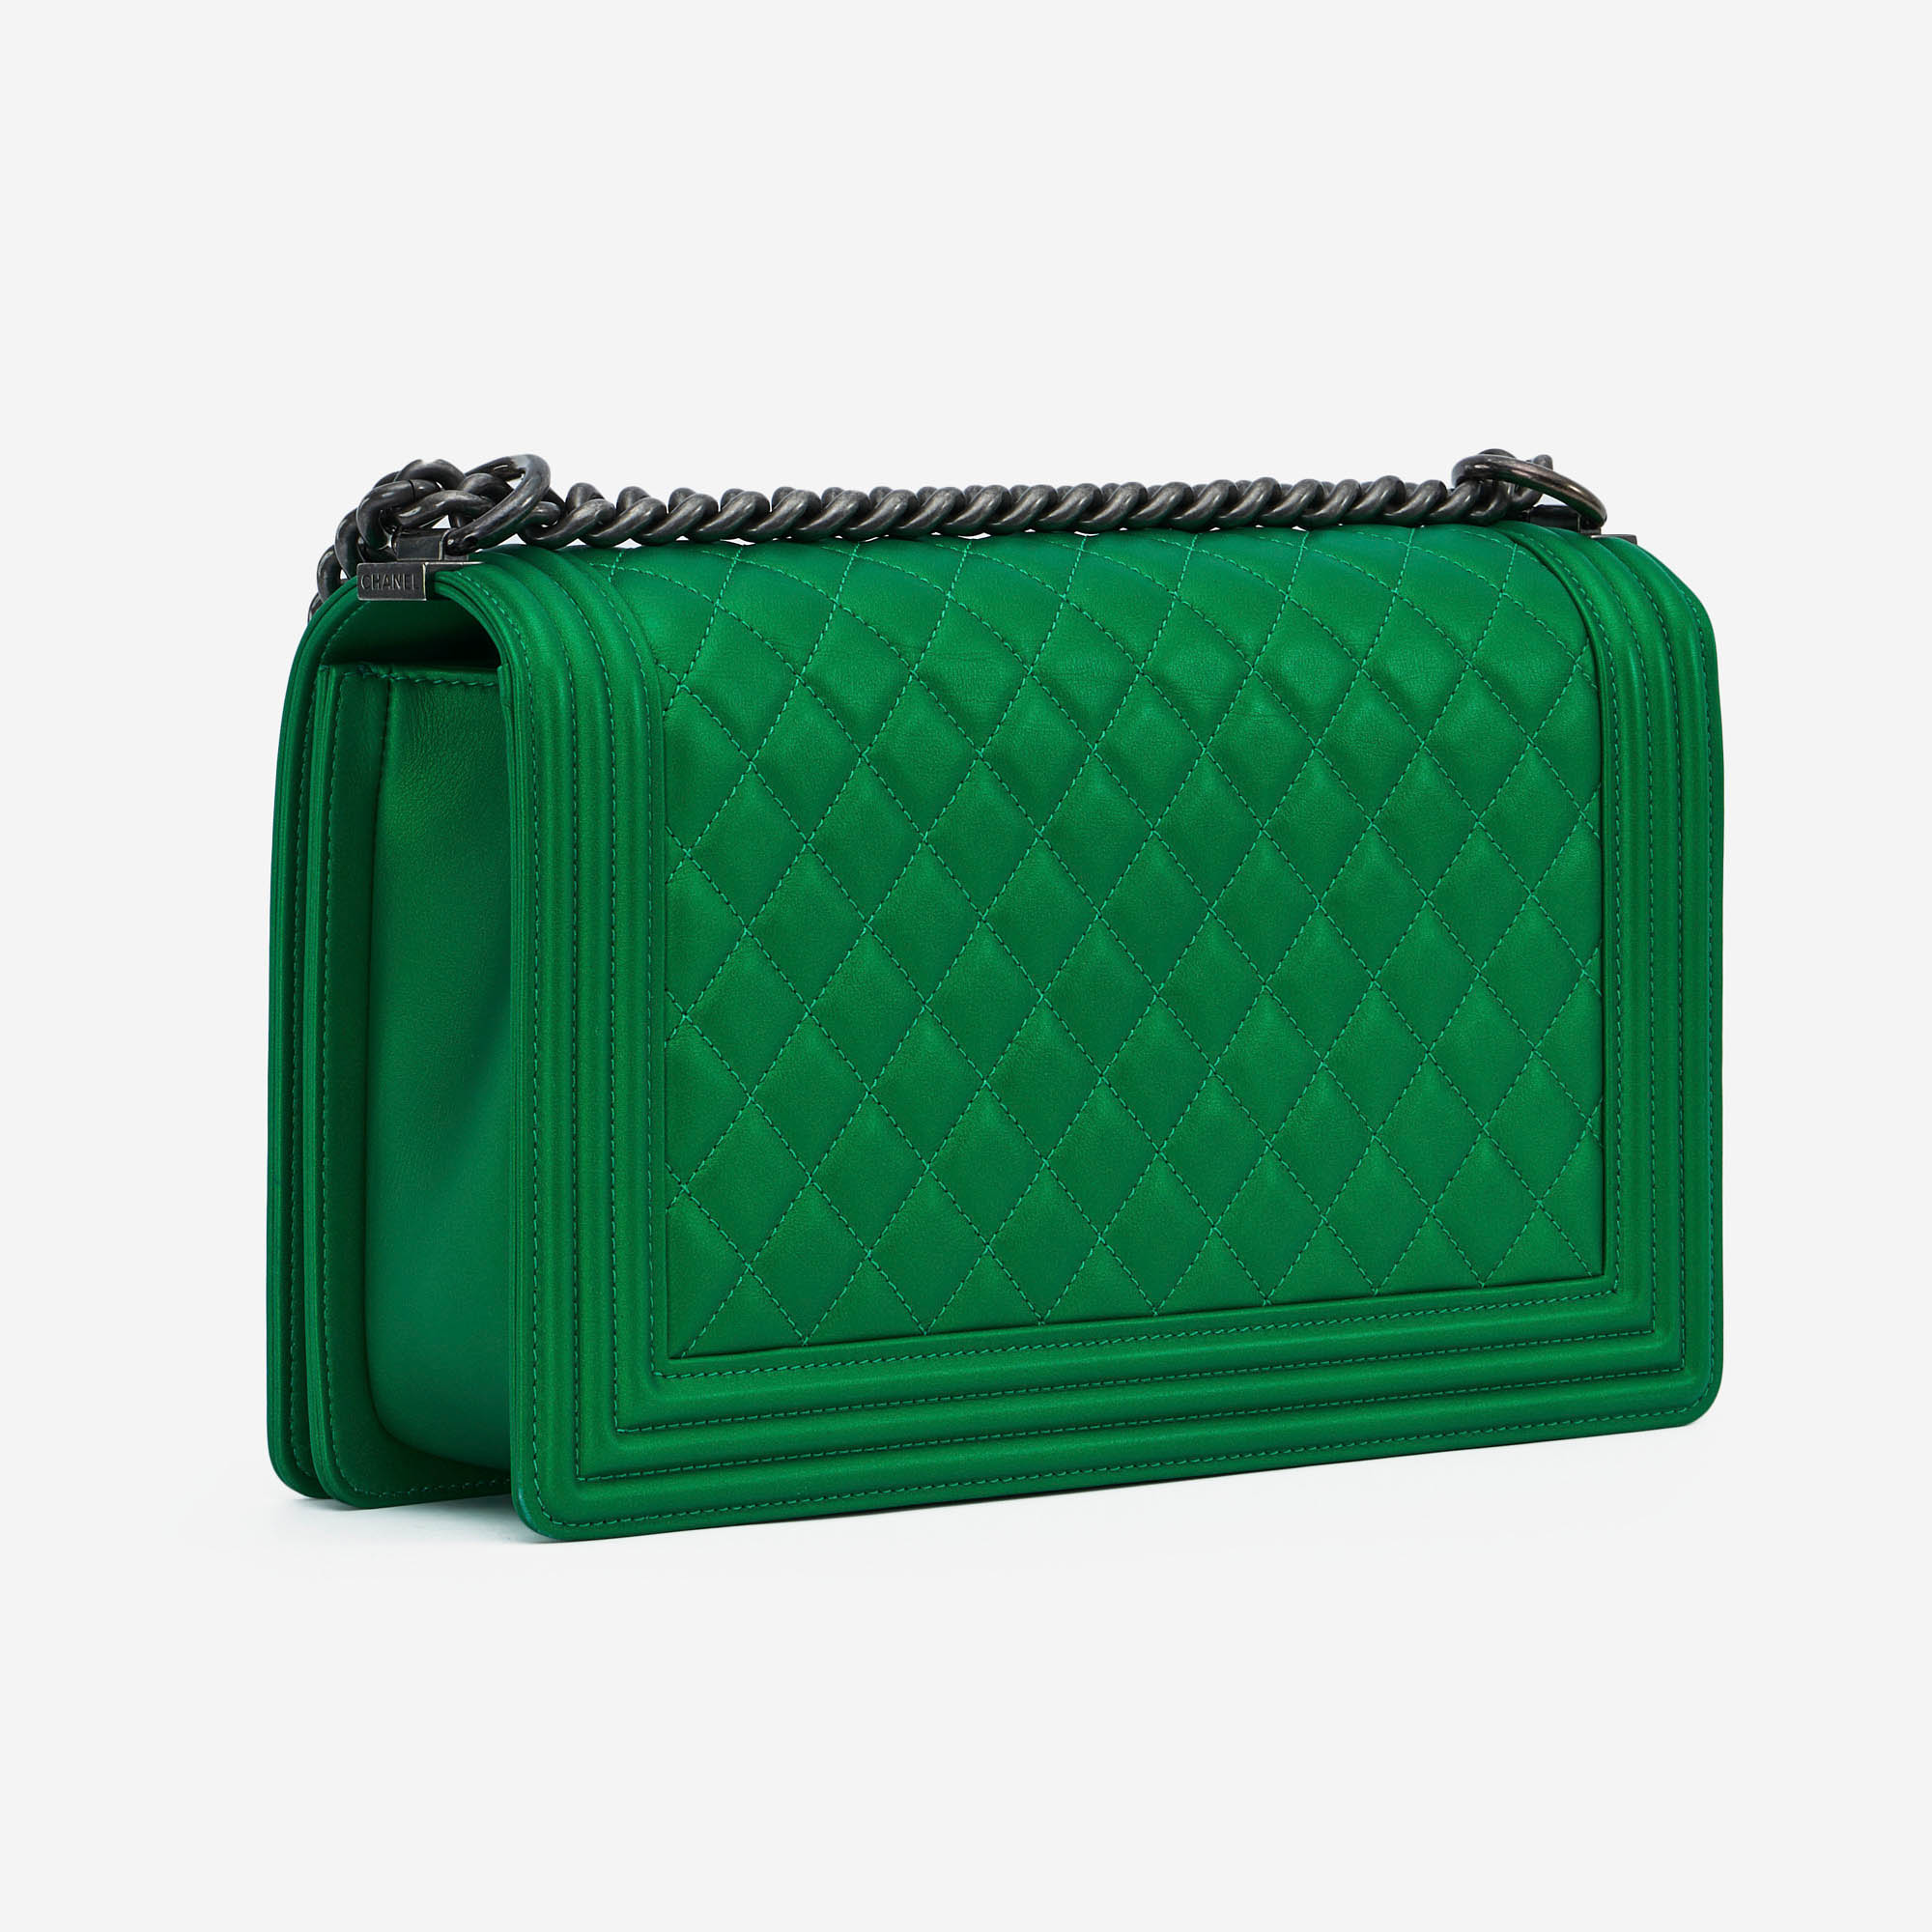 Chanel Iridescent Green Chevron Lambskin Boy Bag Medium Q6BFOF4NG7000